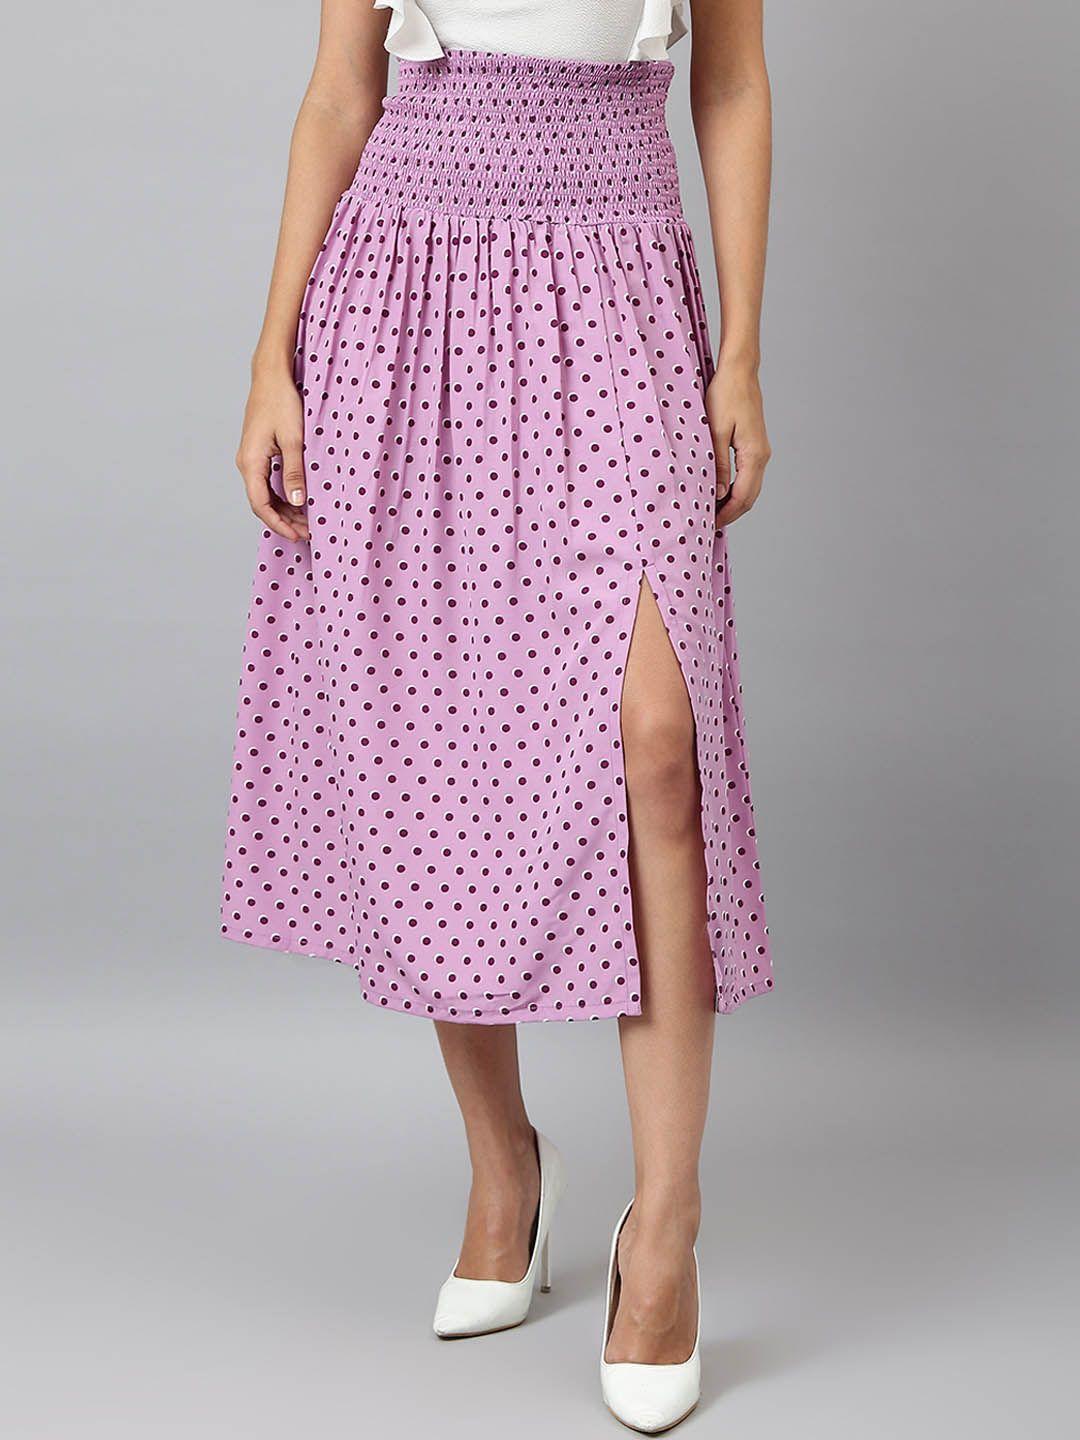 deebaco women purple polka dots printed flared high waist skirt